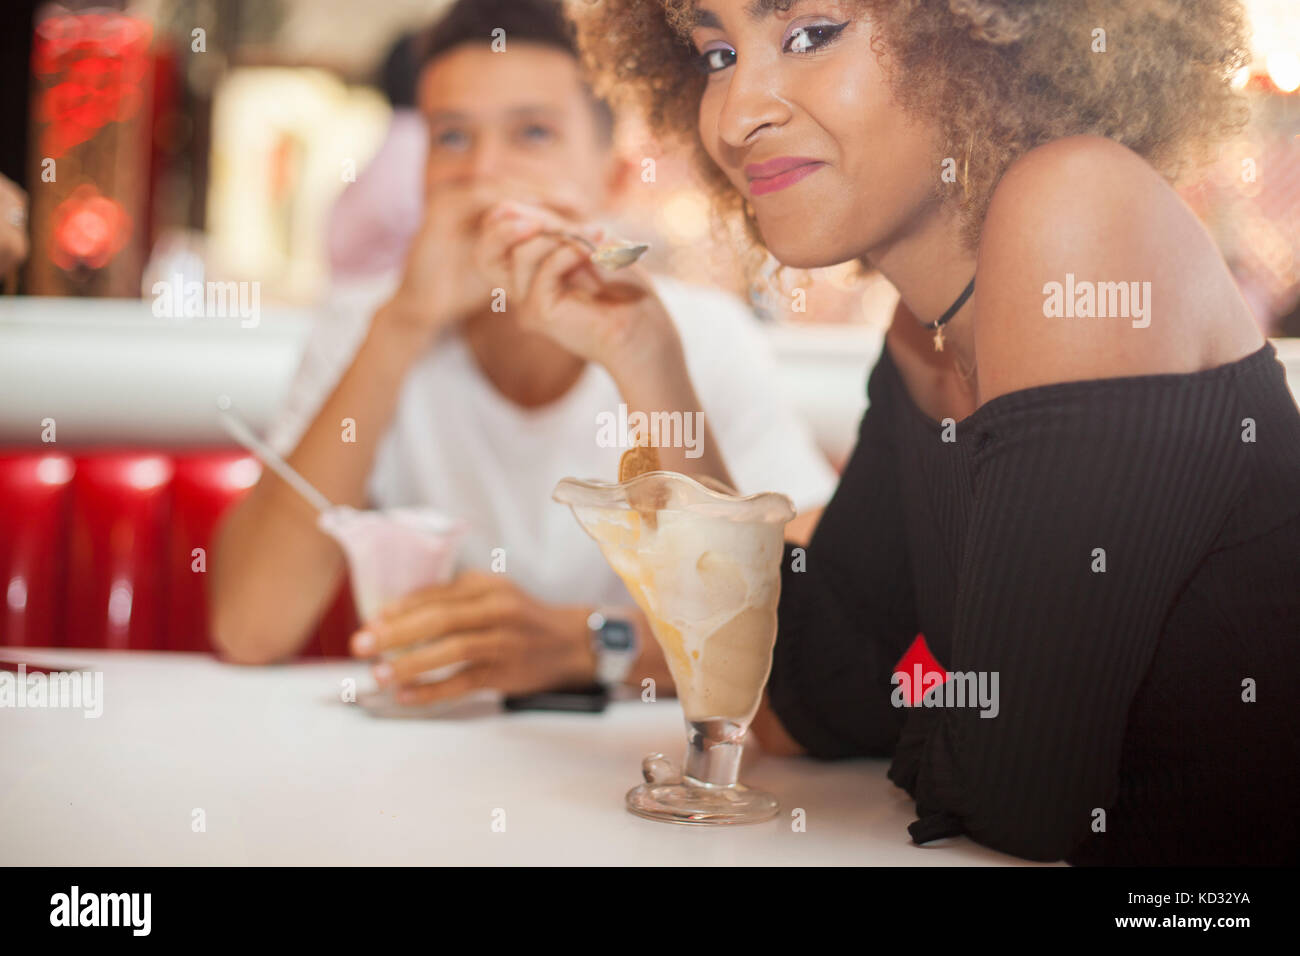 Young couple sitting in diner, manger le dessert, smiling Banque D'Images